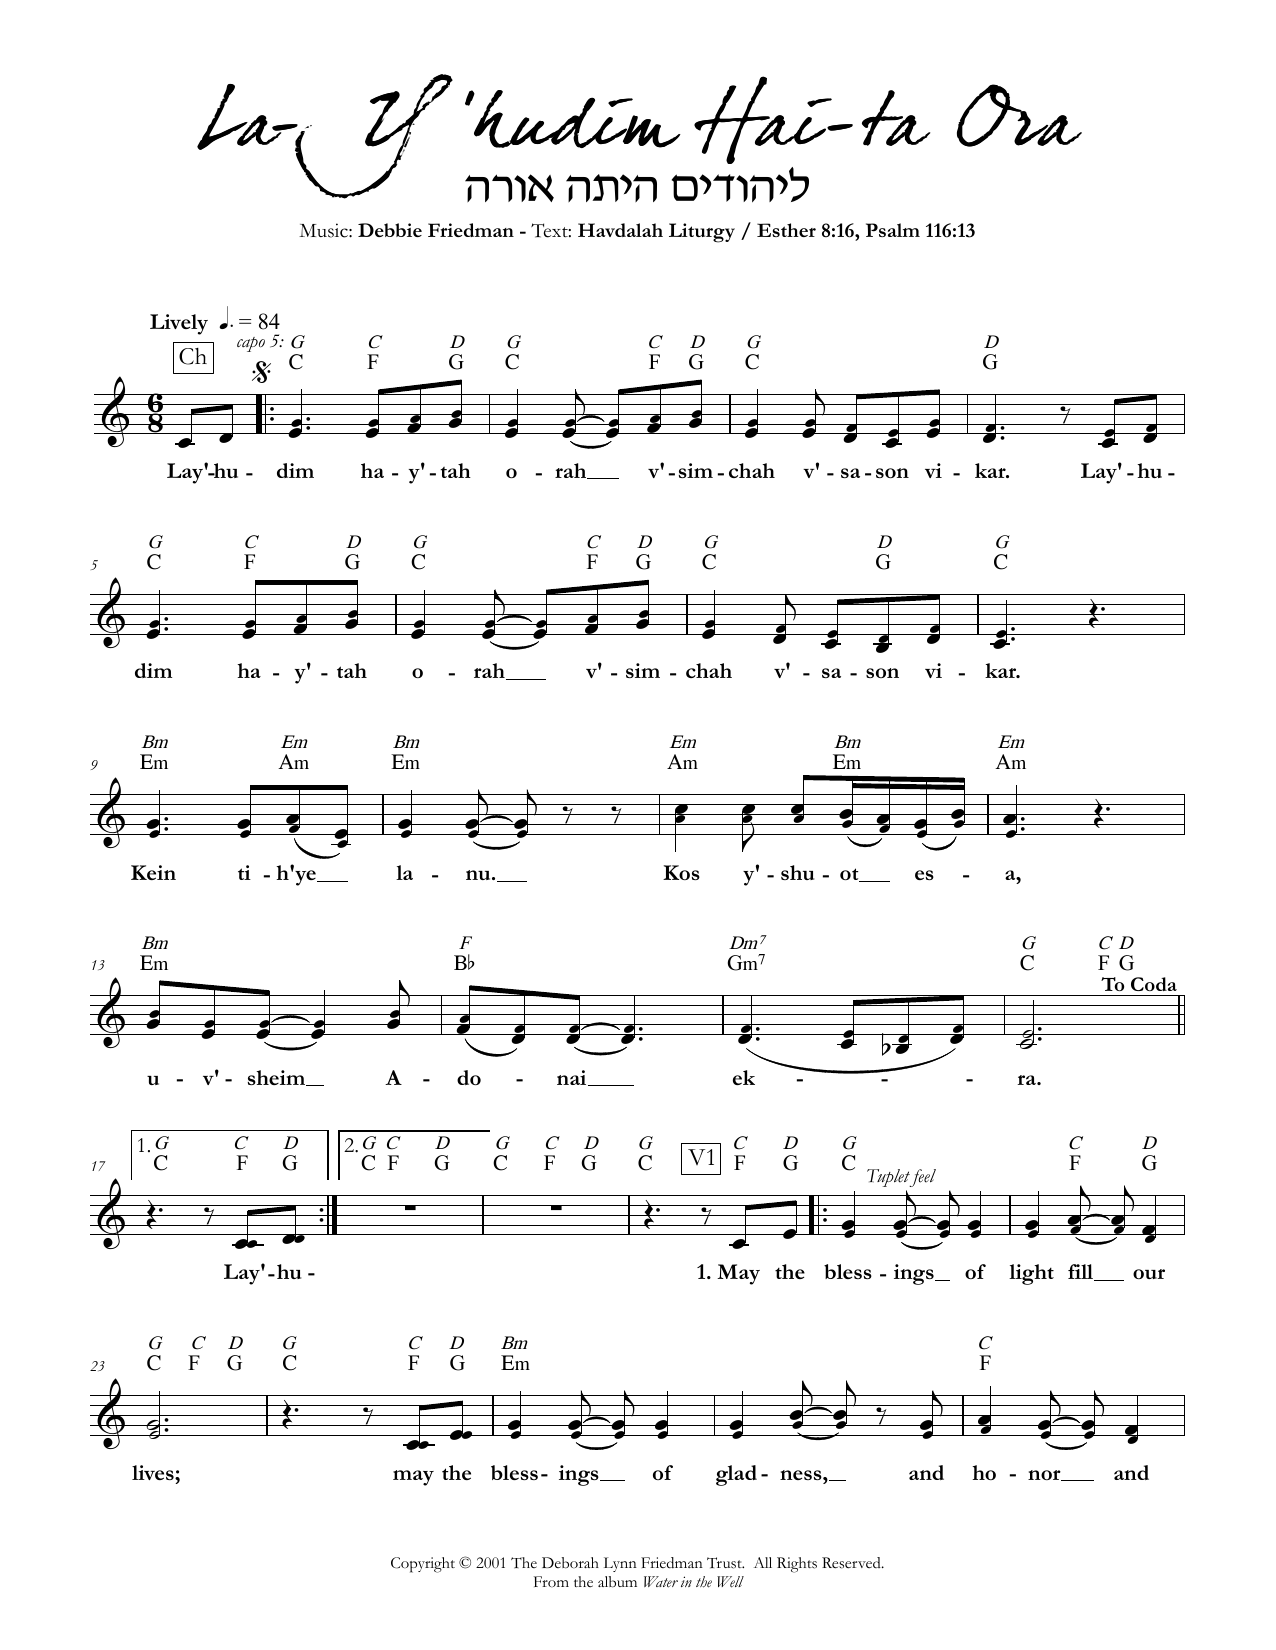 Download Debbie Friedman La-Y'hudim Hai-ta Ora Sheet Music and learn how to play Lead Sheet / Fake Book PDF digital score in minutes